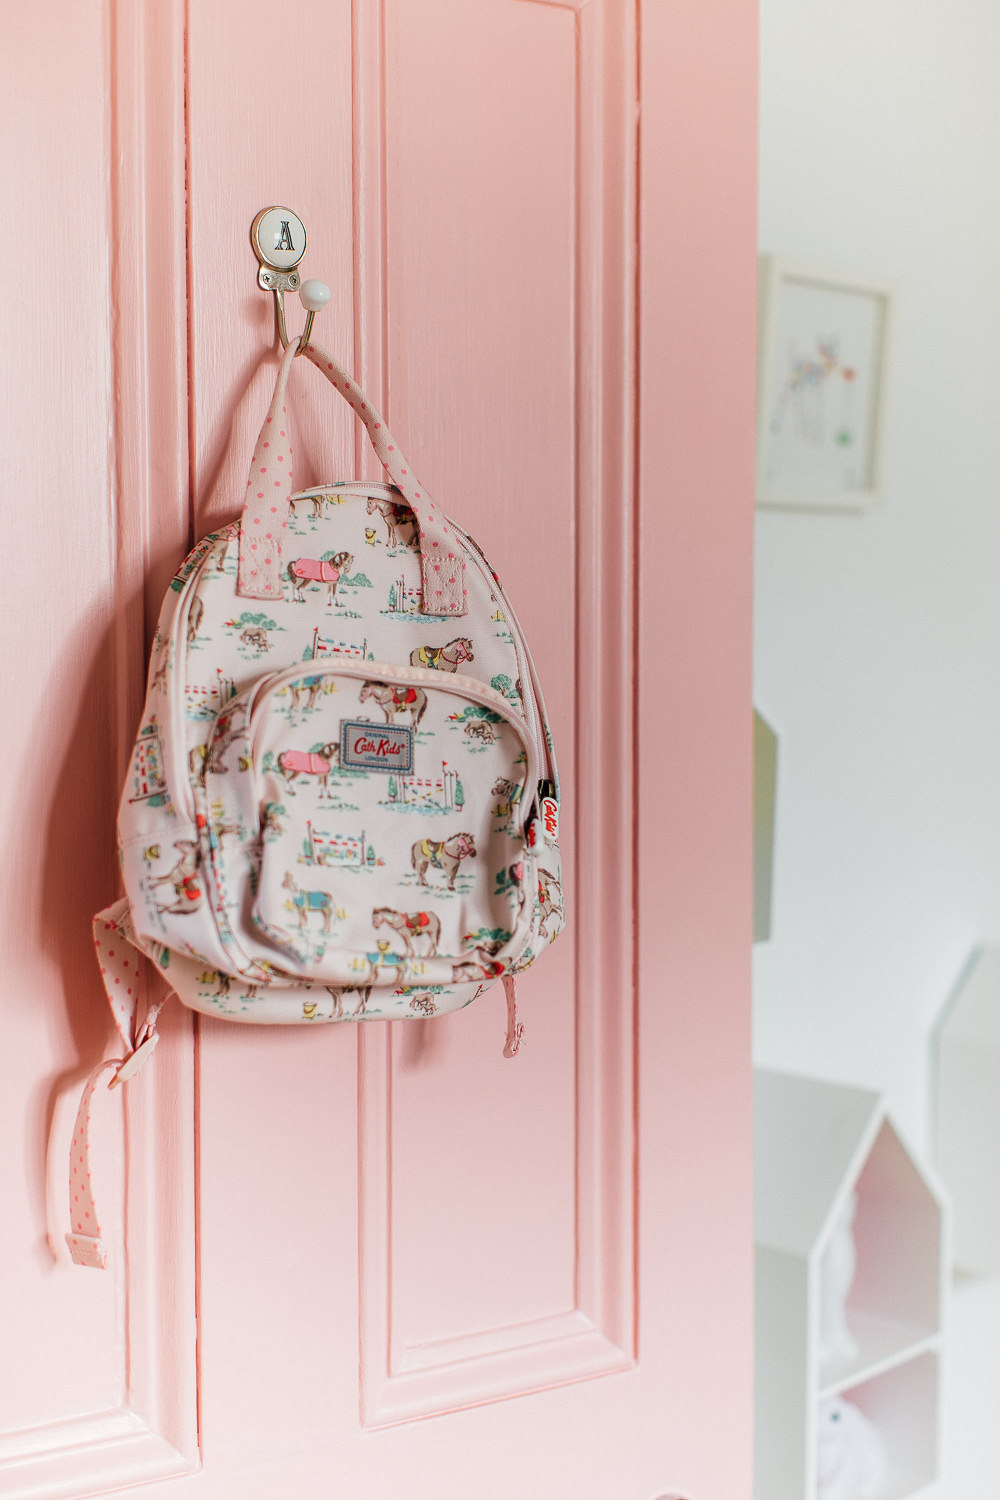 Cath Kidston rucksack and statement pink door